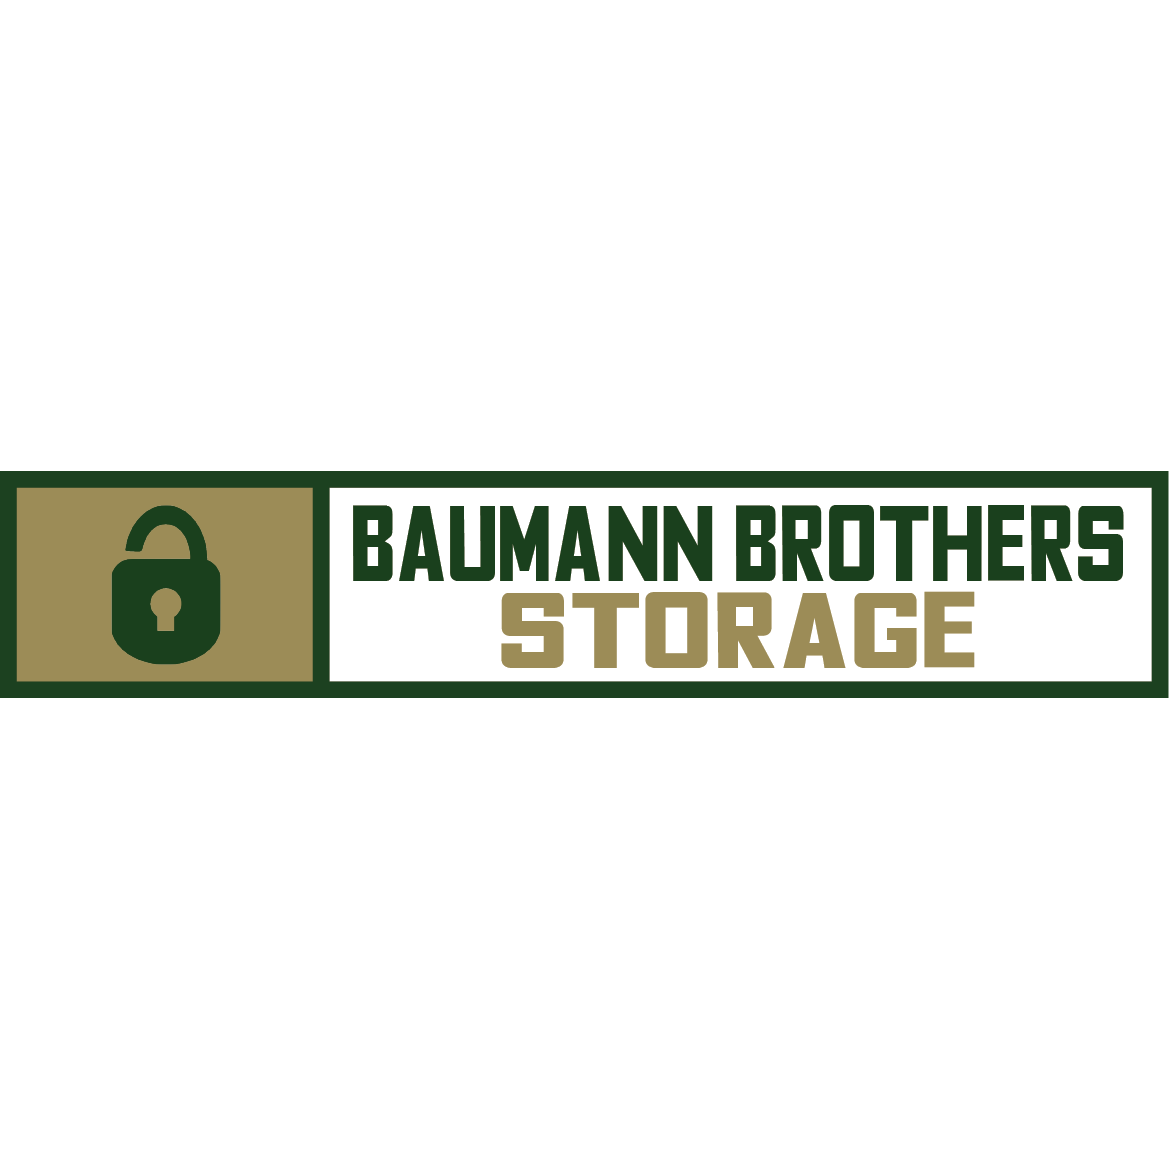 Baumann Brothers Storage - Colville, WA 99114 - (509)936-0994 | ShowMeLocal.com